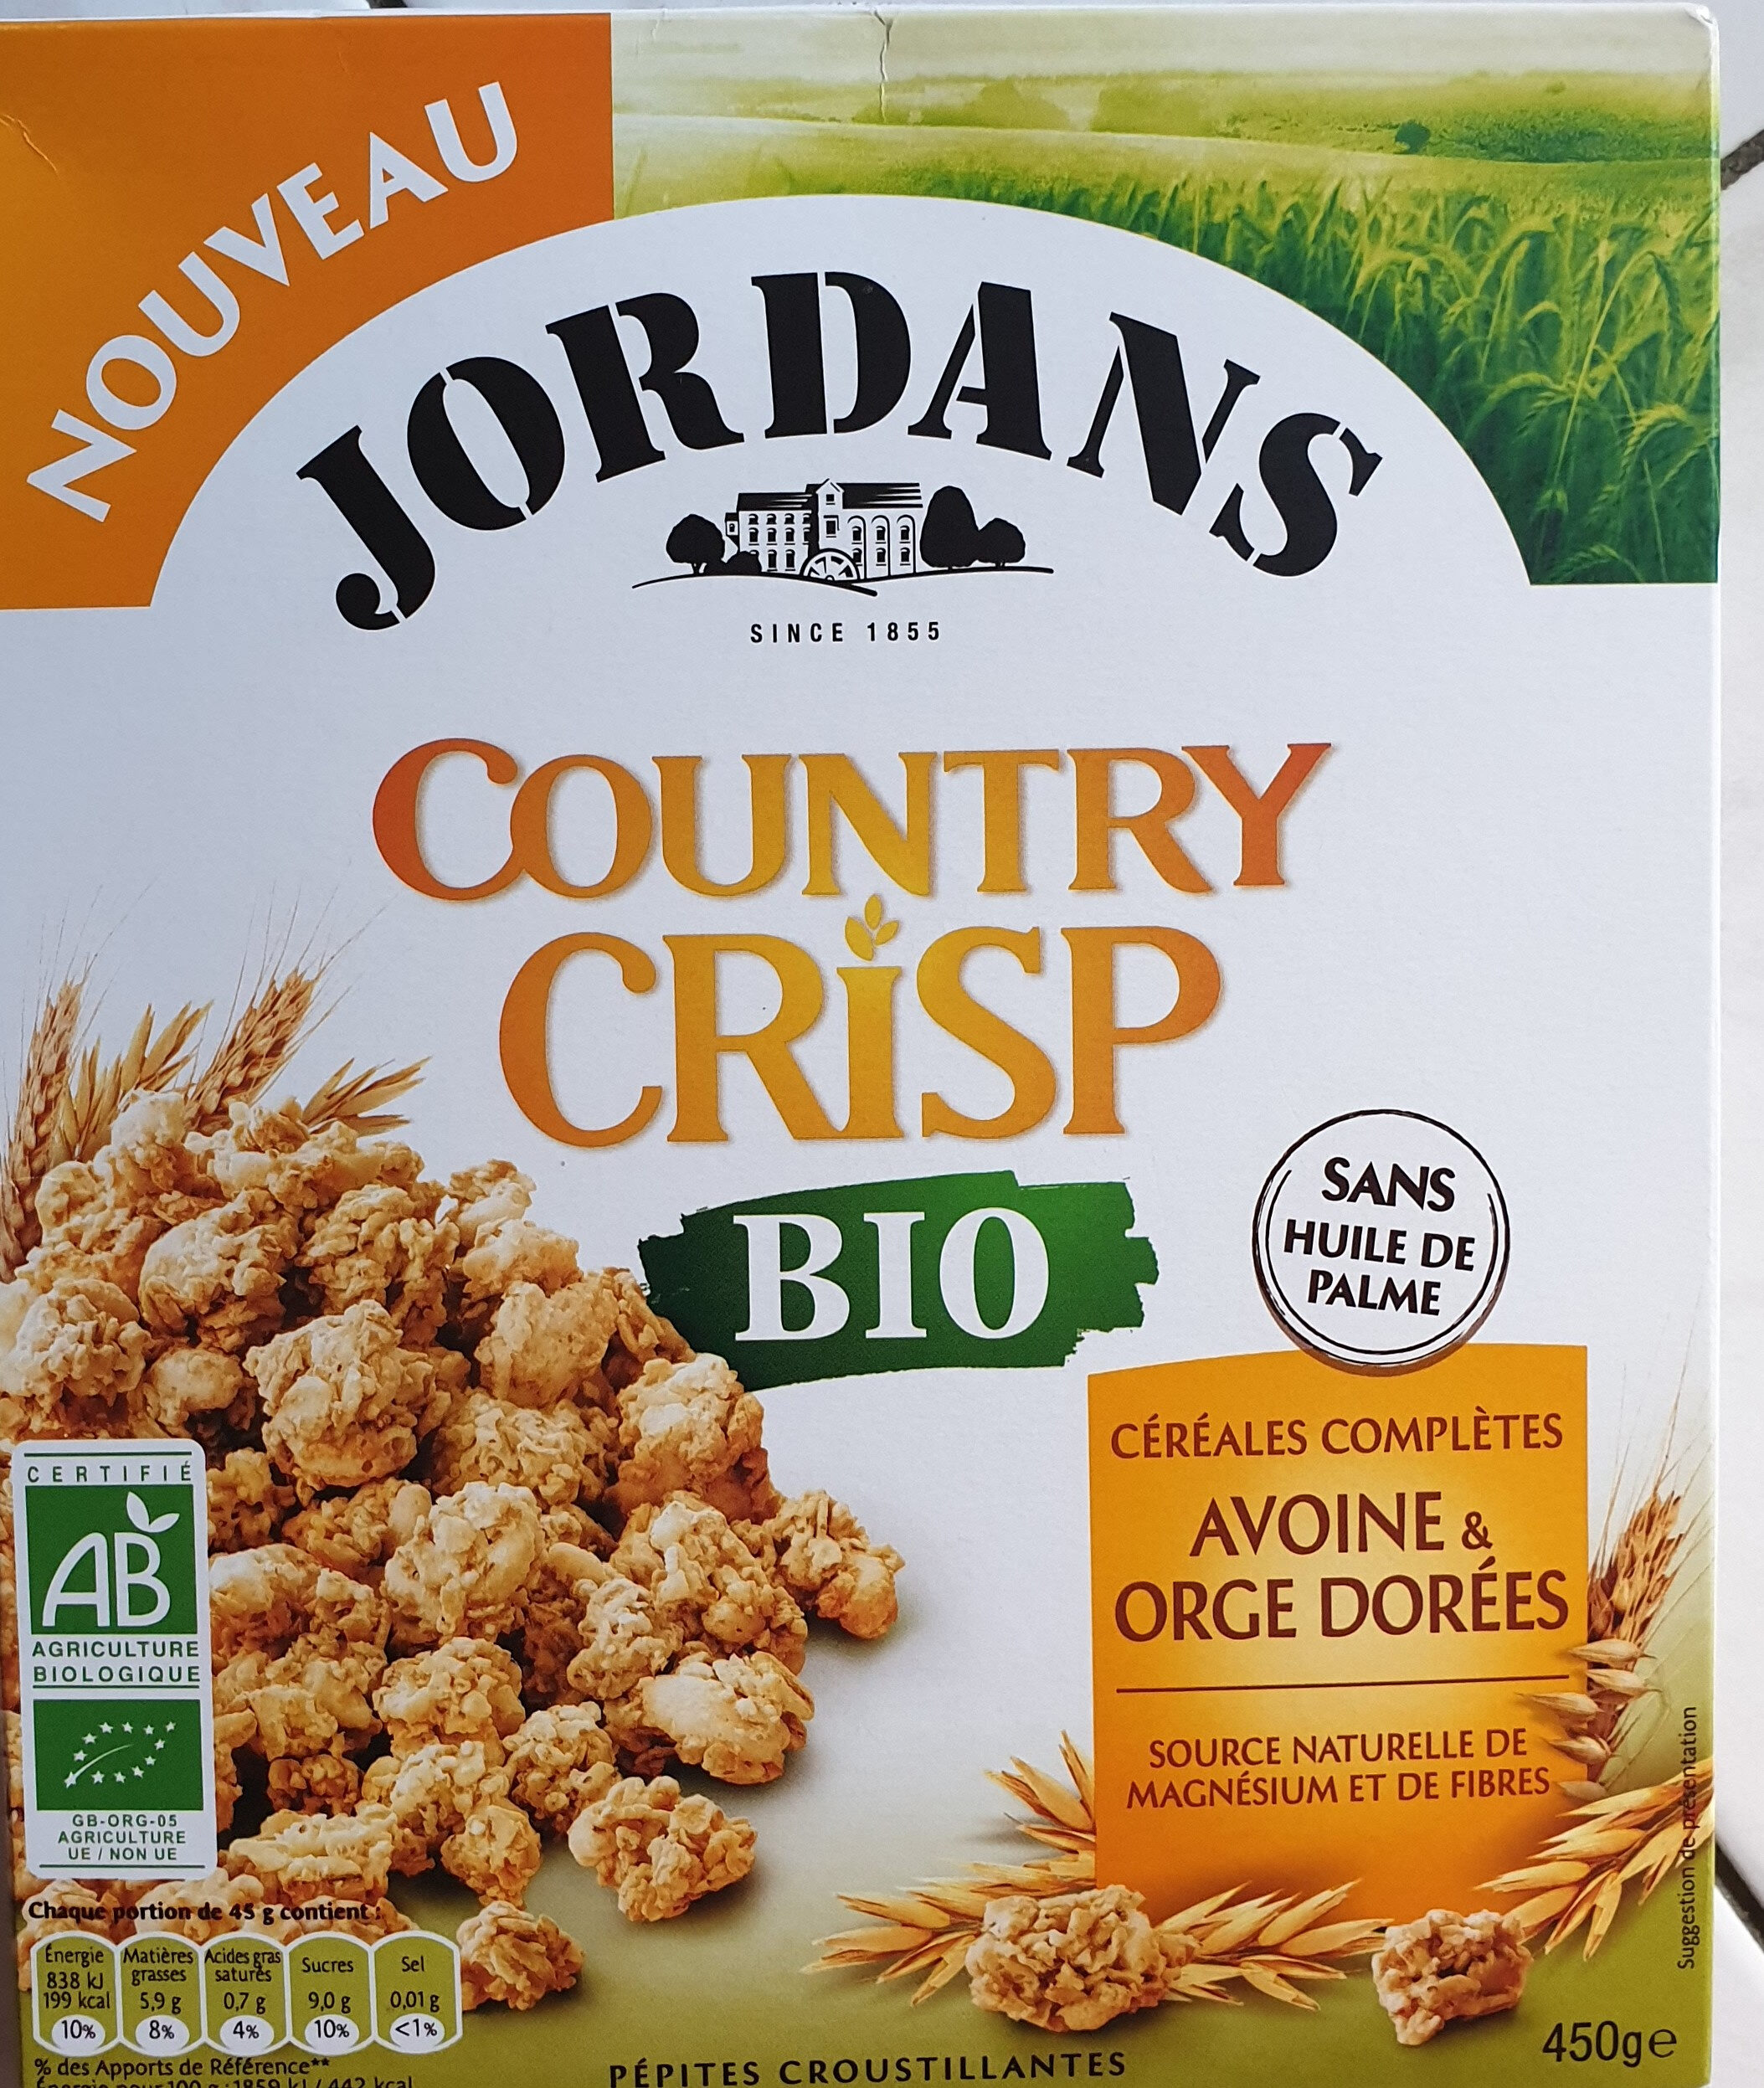 country crisp bio - Product - fr